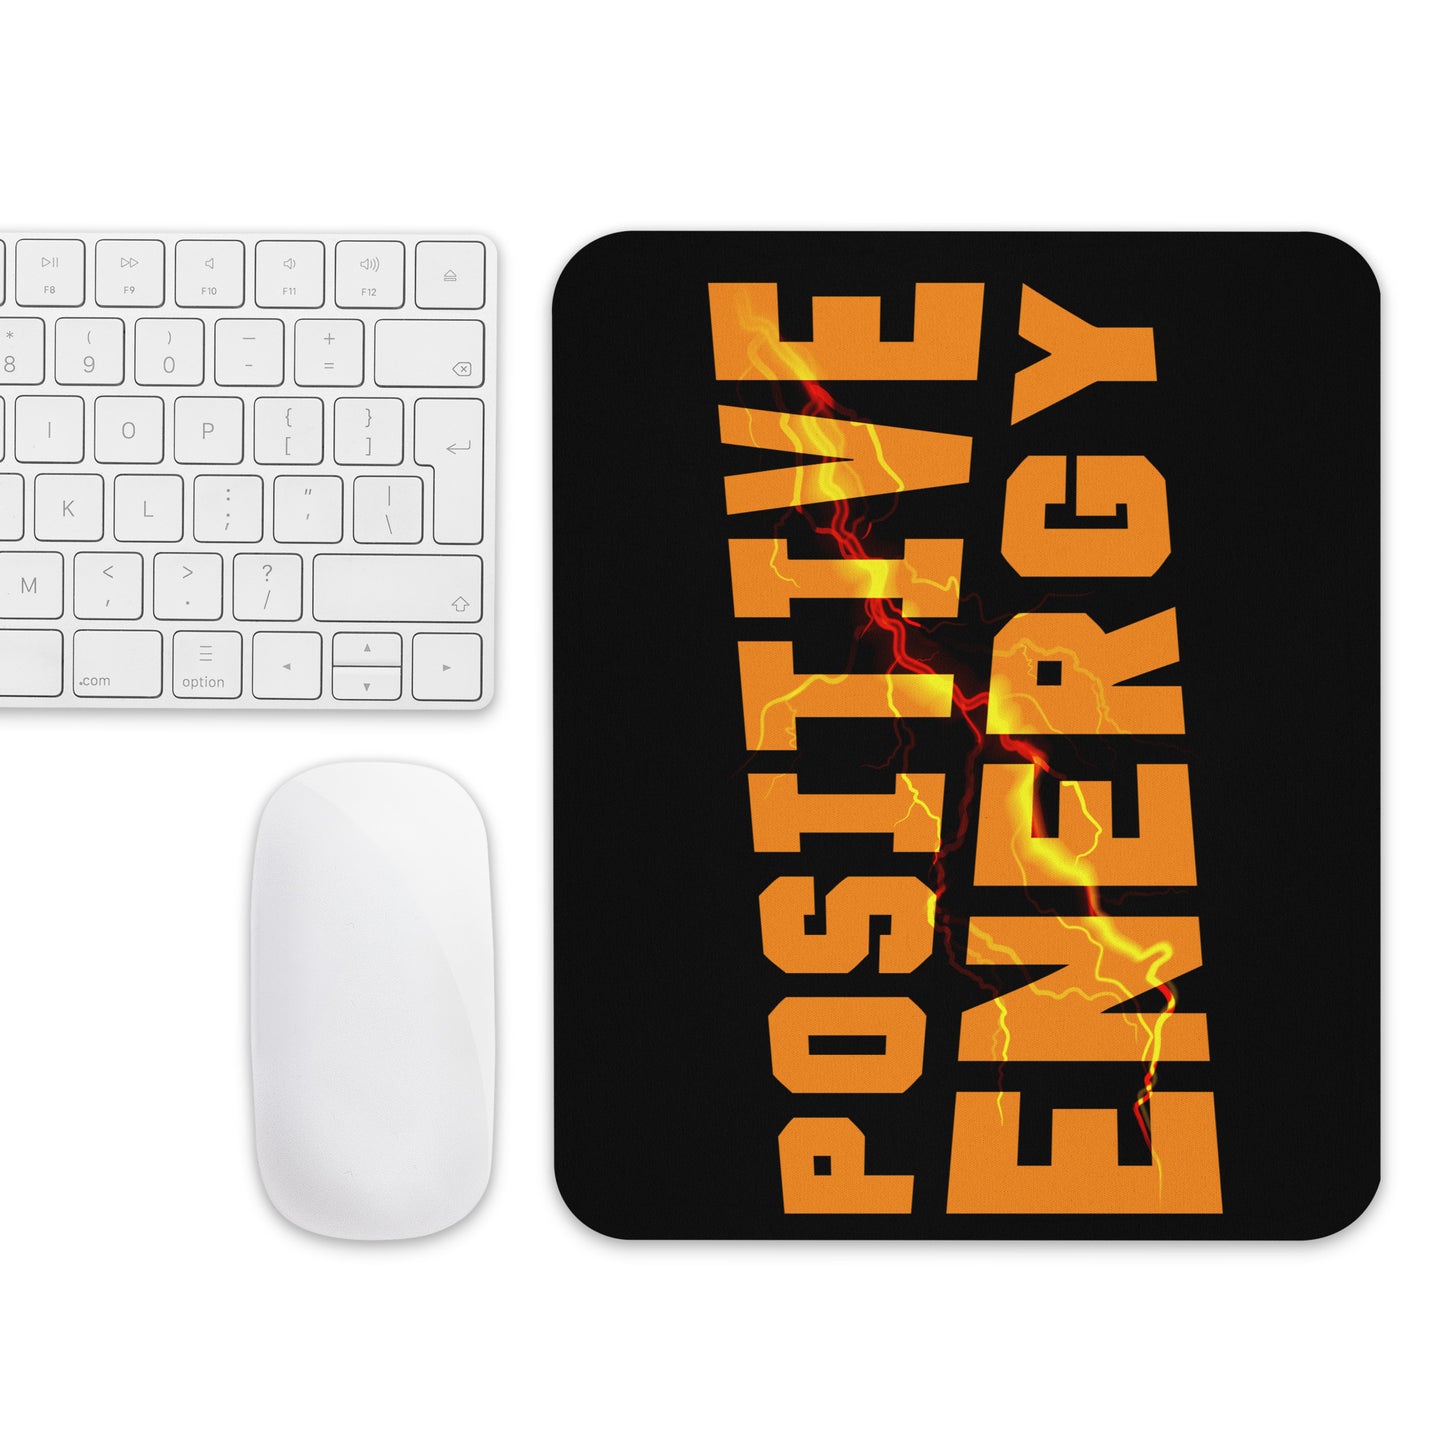 Positive Energy - Mouse pad - JayMayOnline eStore